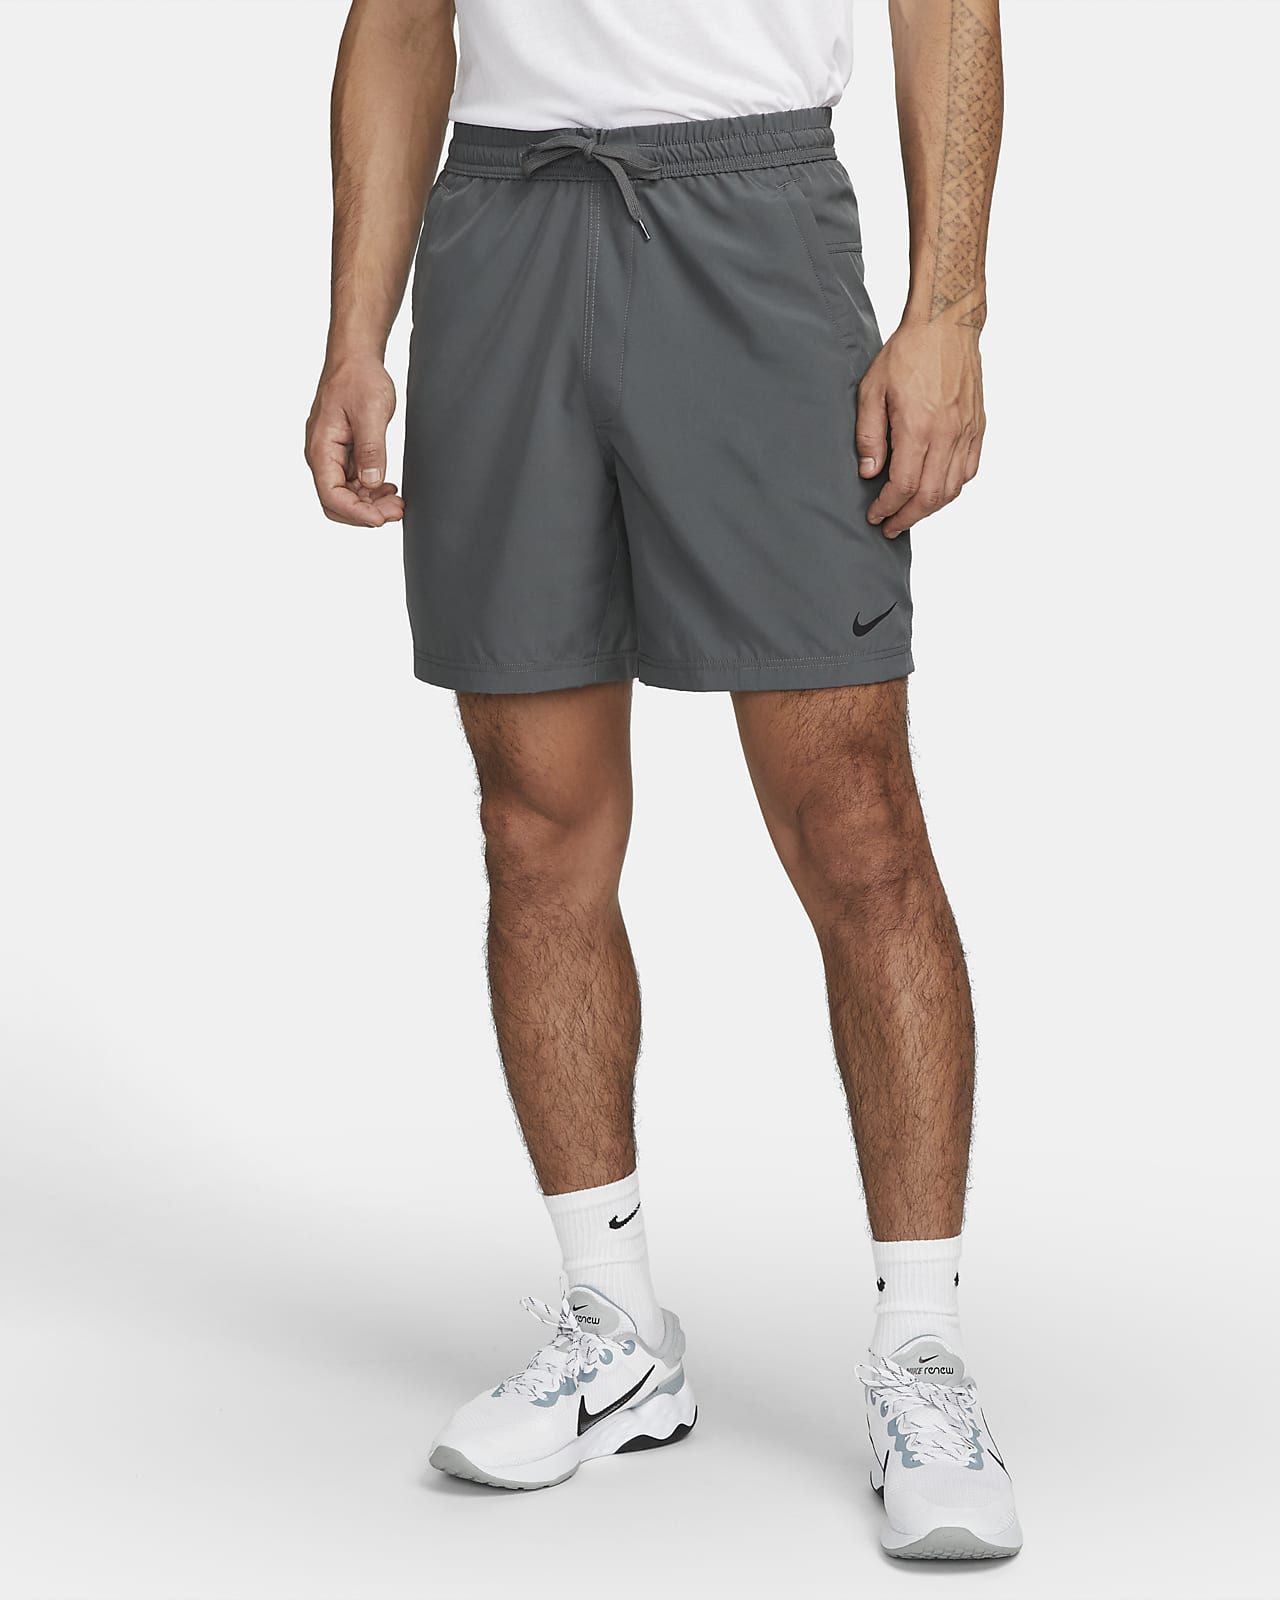 Nike Dri-FIT Men's 18cm Unlined Shorts. ID